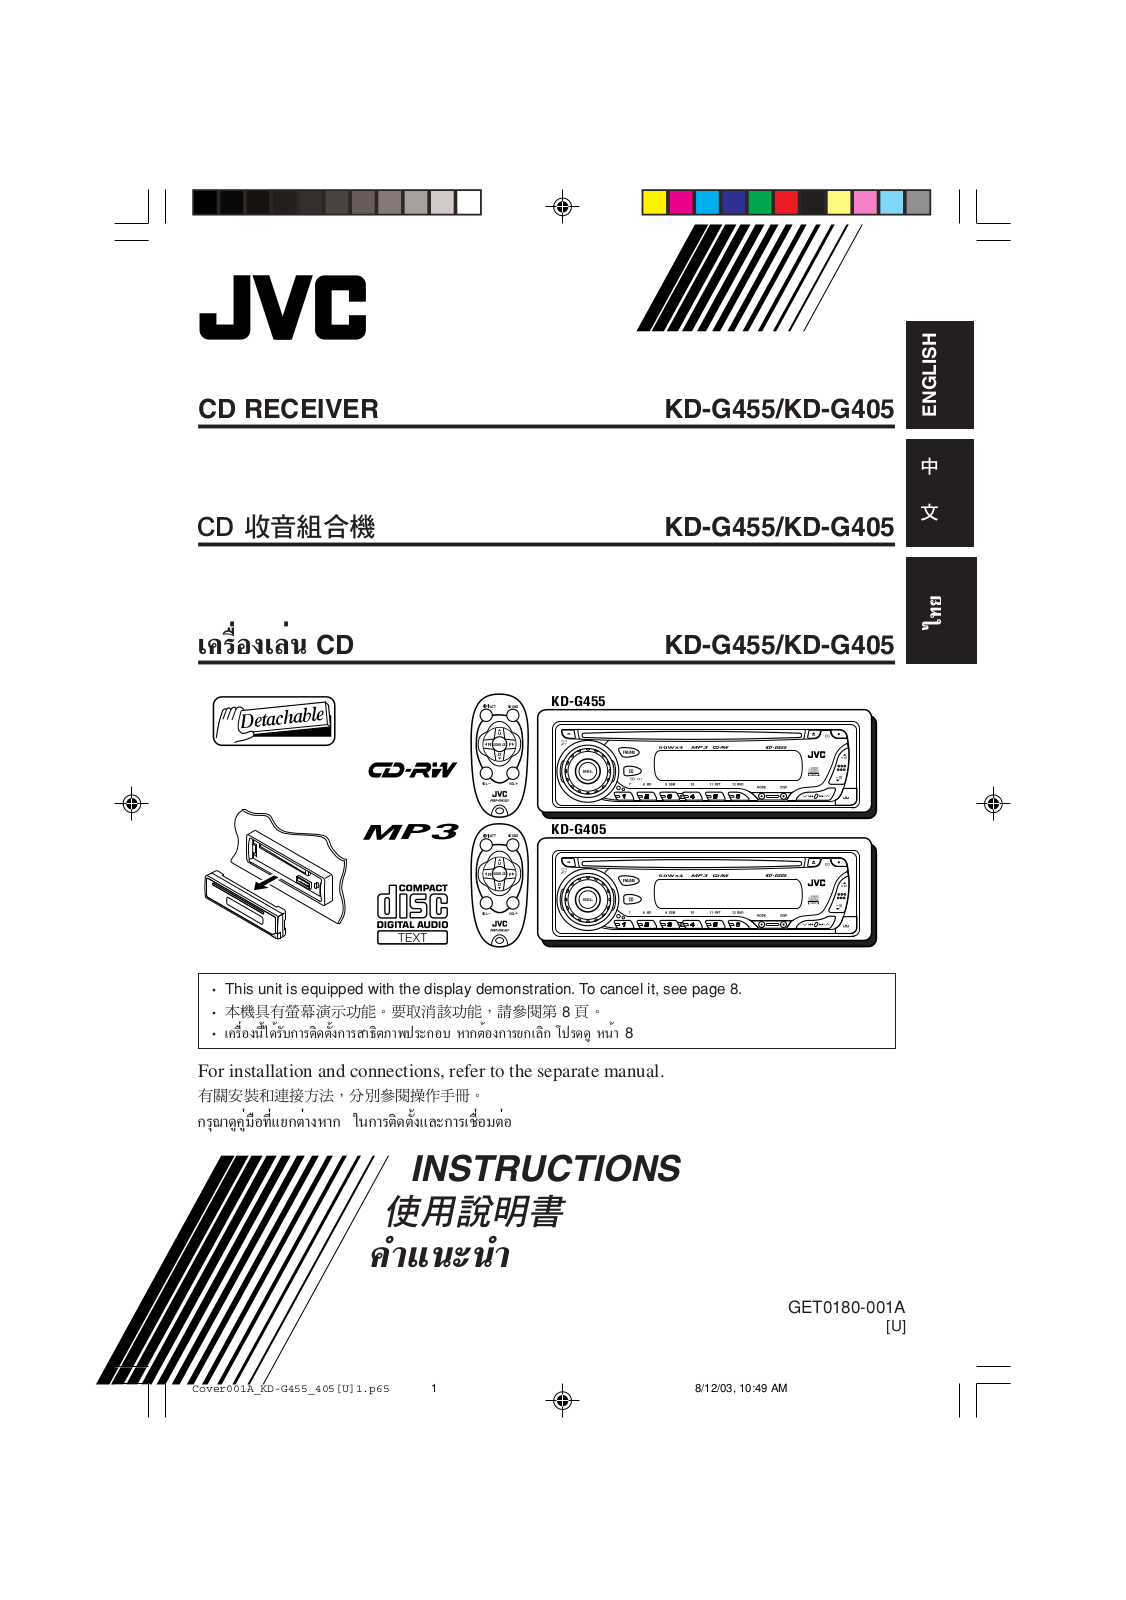 JVC KD-G405, KD-G455 User Manual